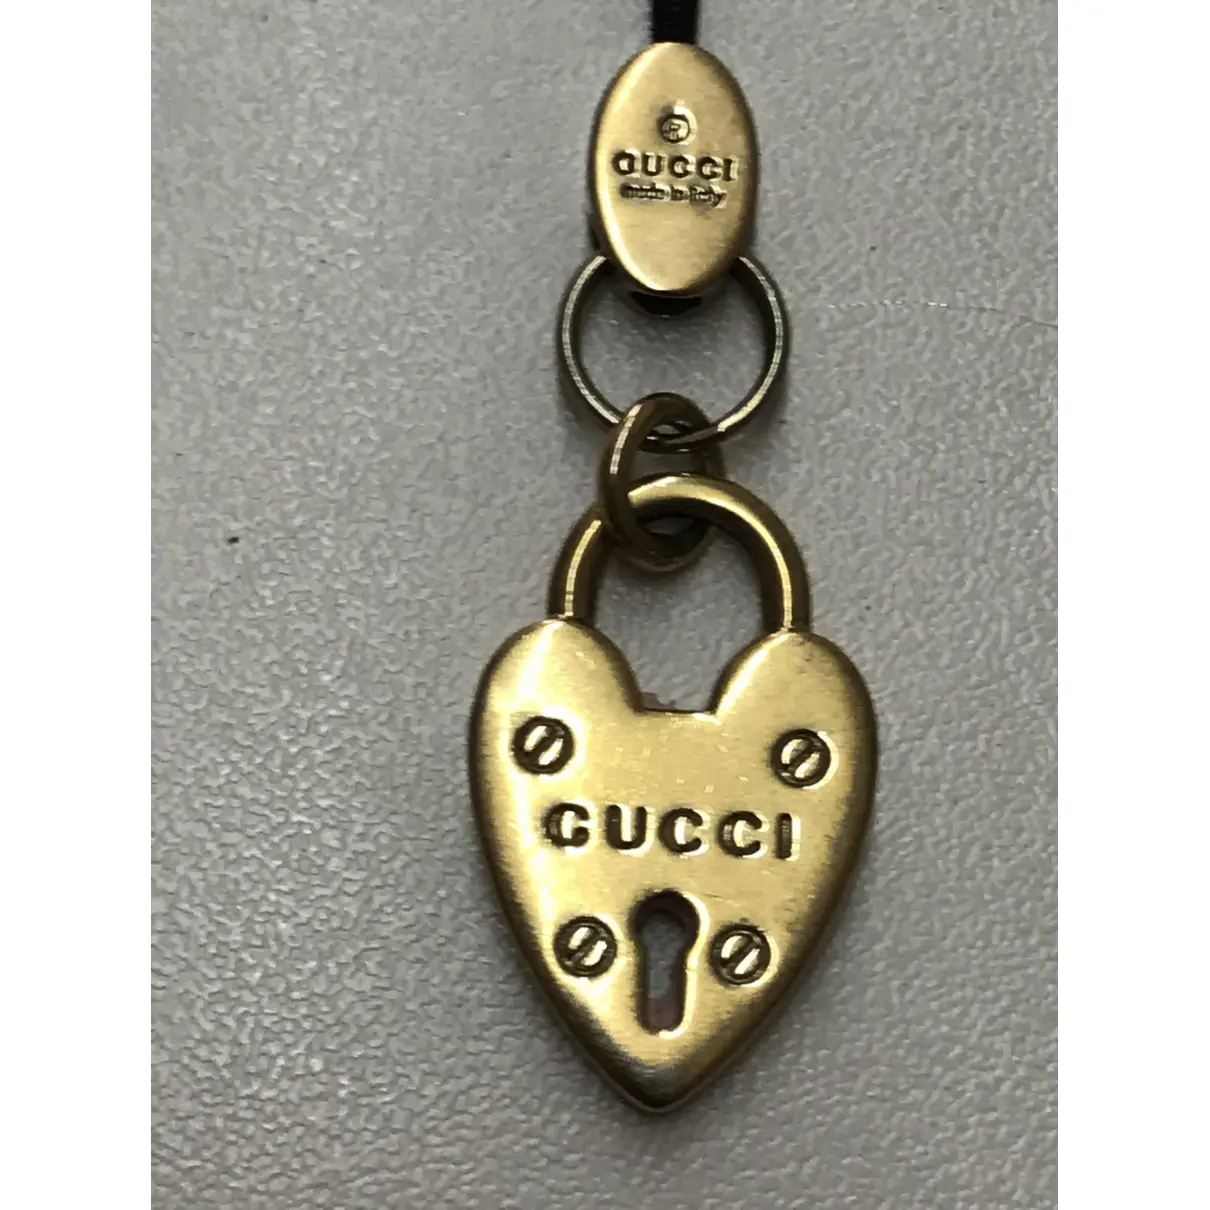 Buy Gucci Cloth phone charm online - Vintage